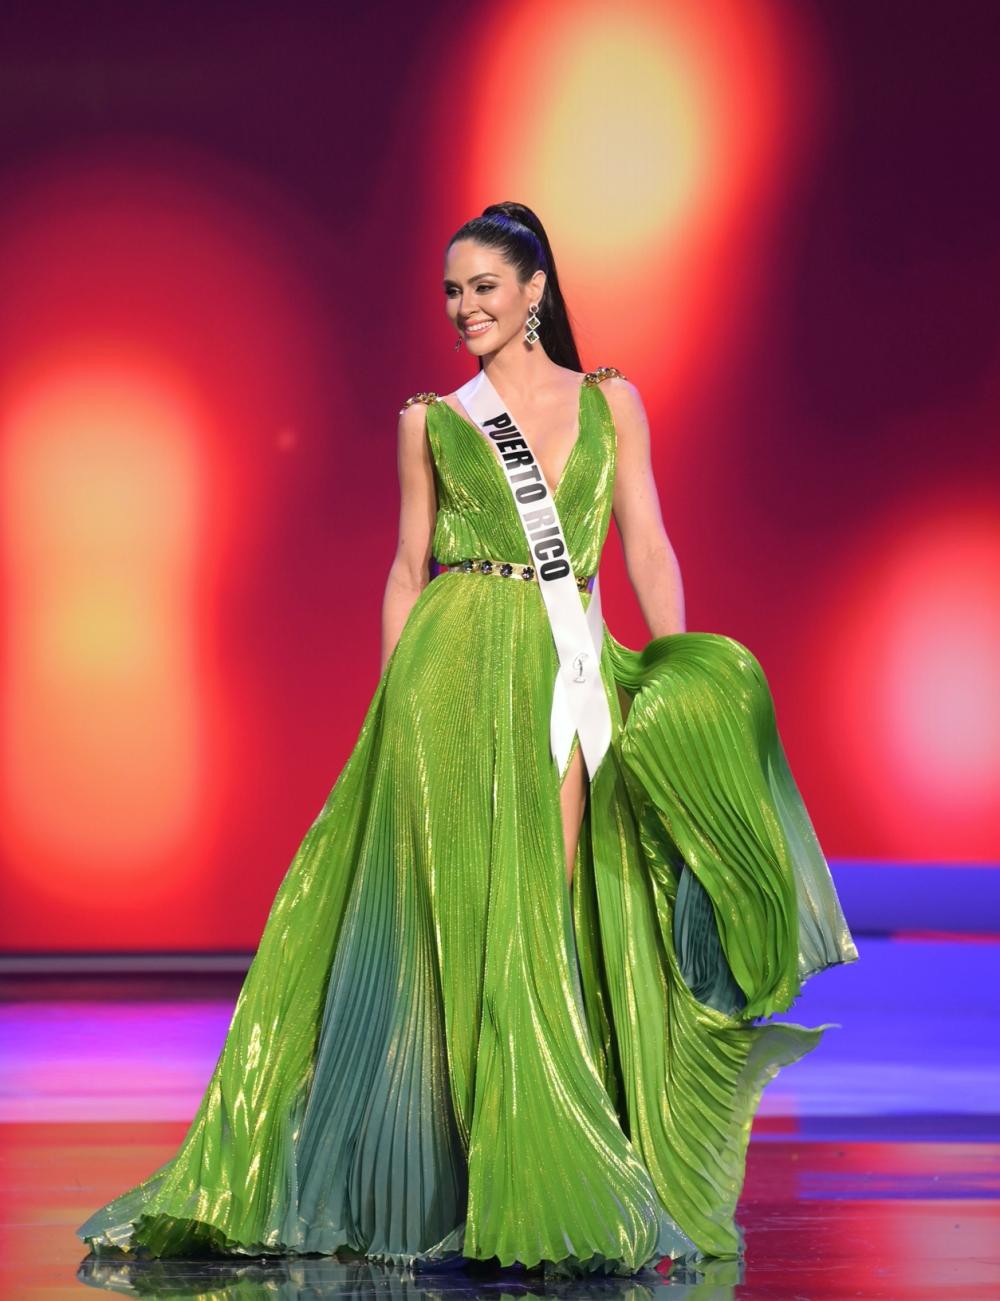 Vị trí thứ 7 thuộc về Hoa hậu Puerto Rico - Estefania Soto Torres.